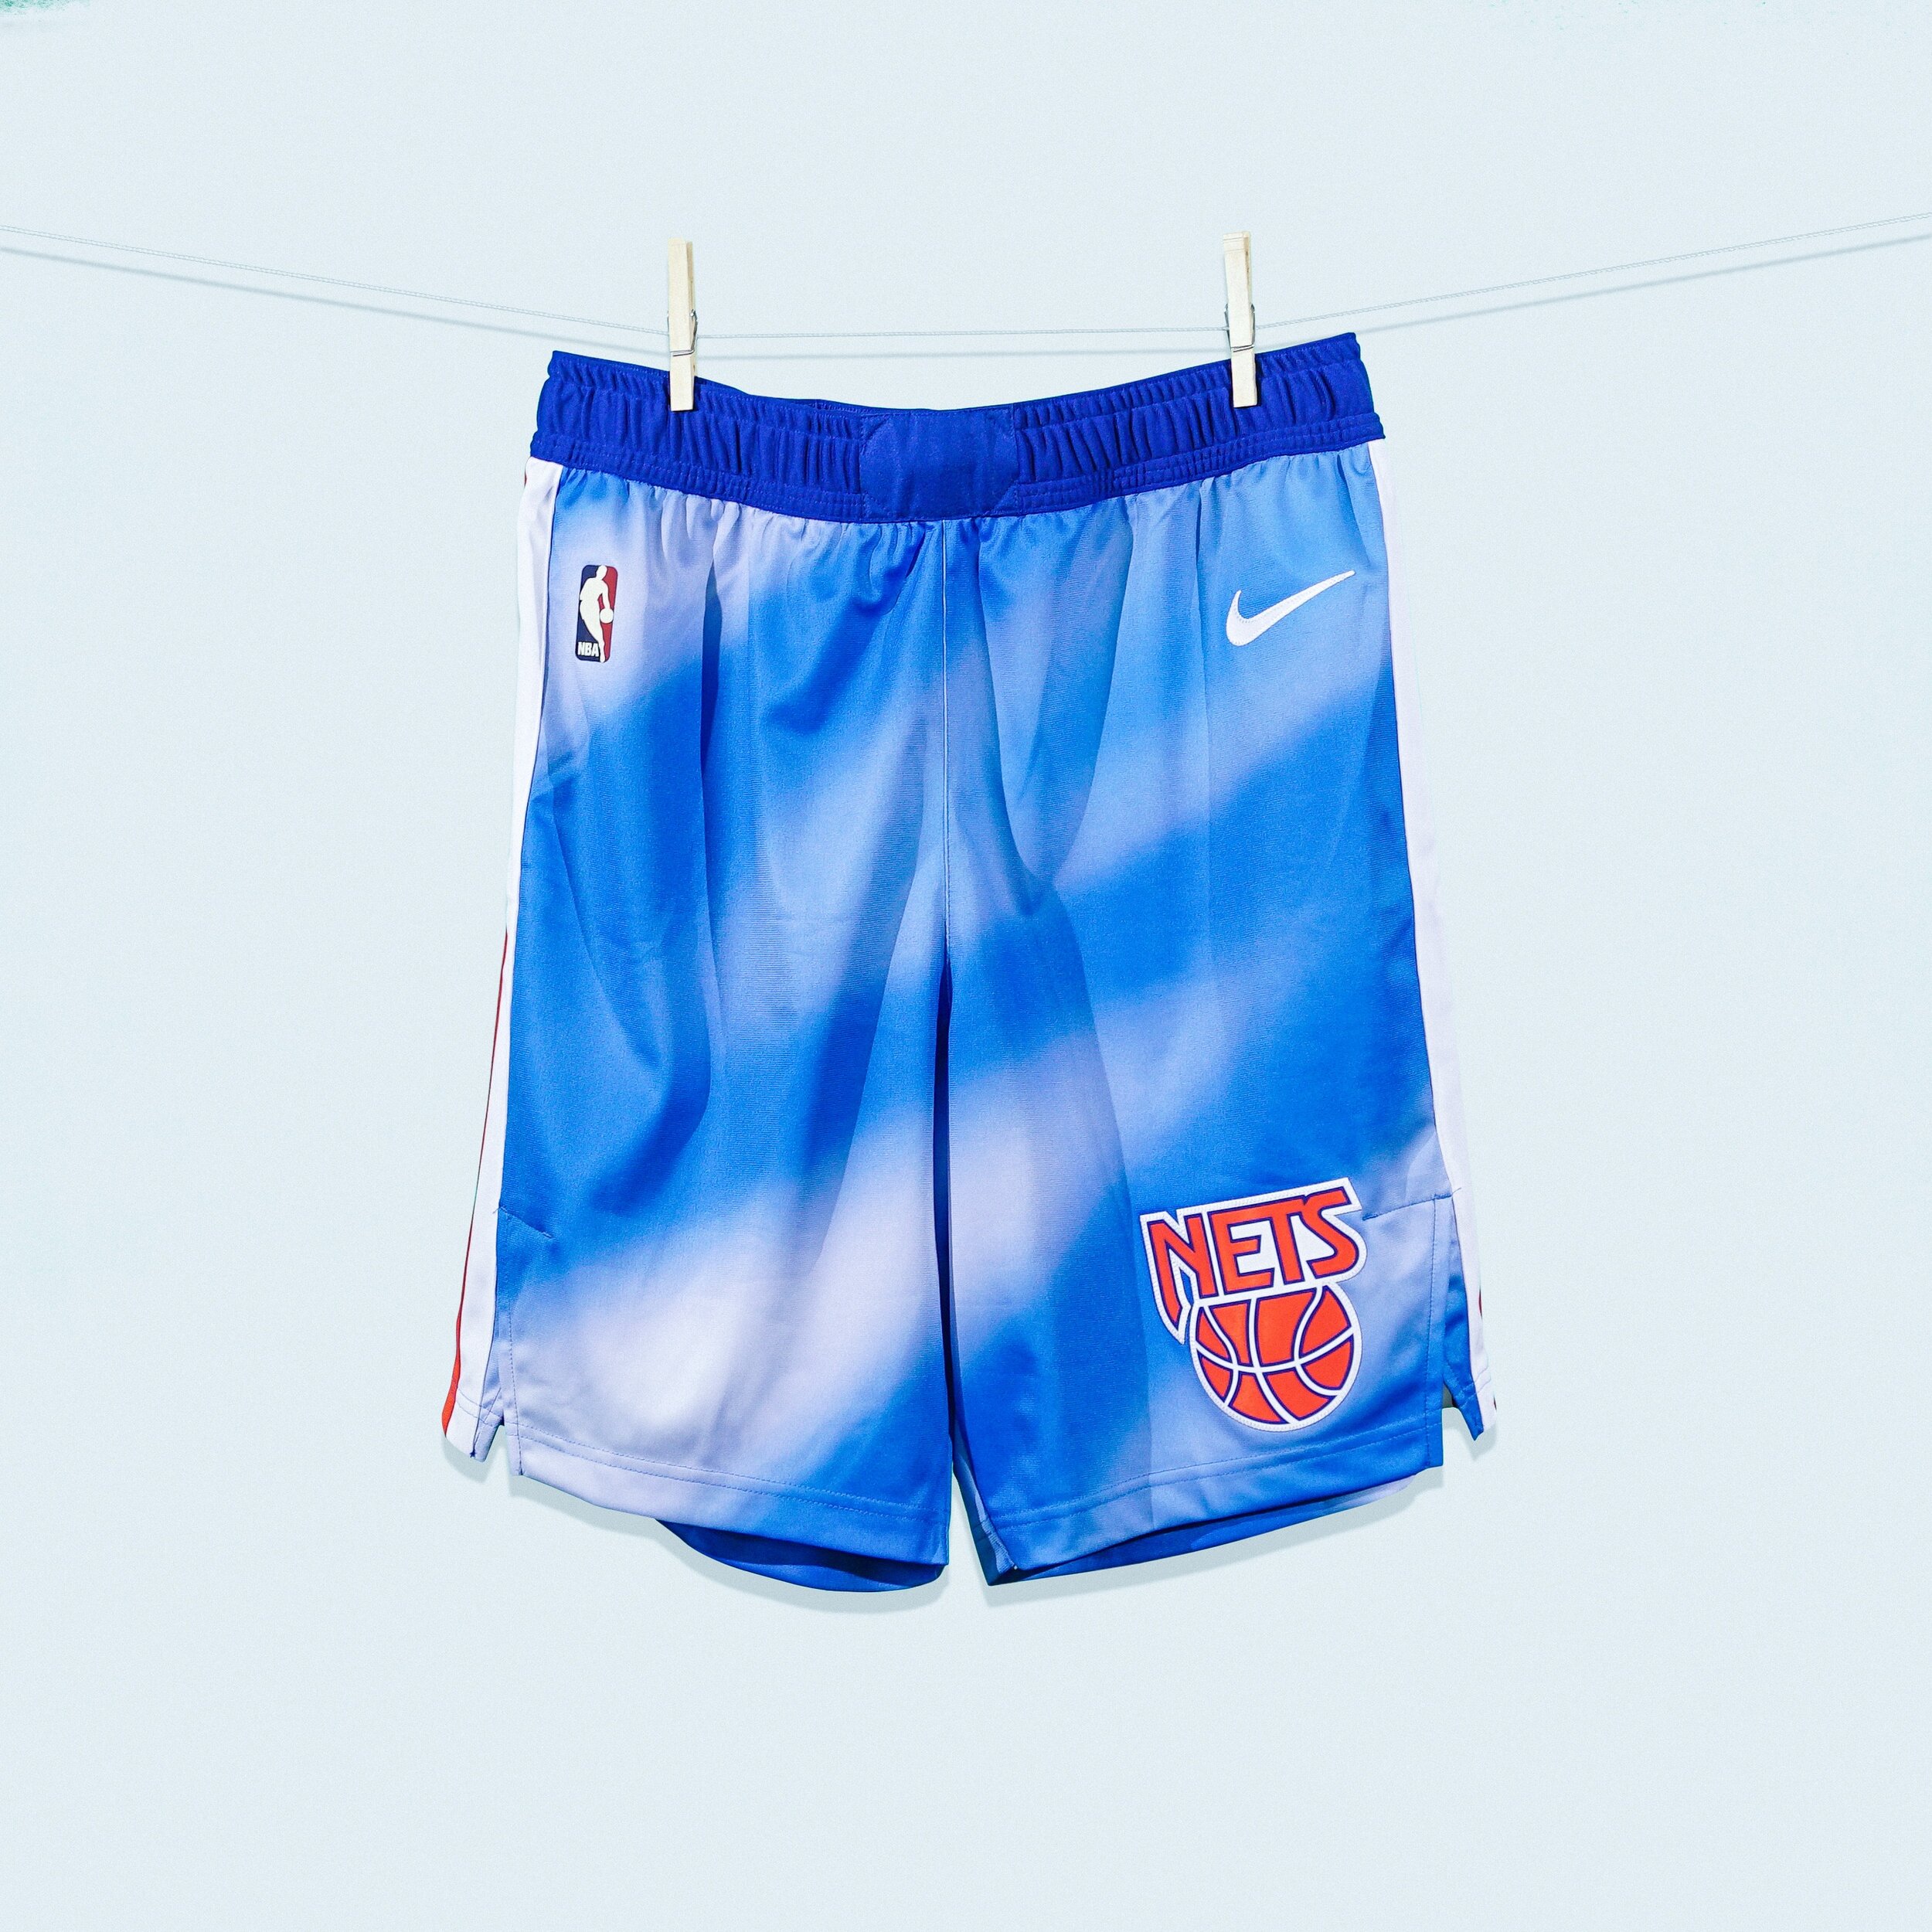 Brooklyn Nets New Classic Edition Uniform — UNISWAG